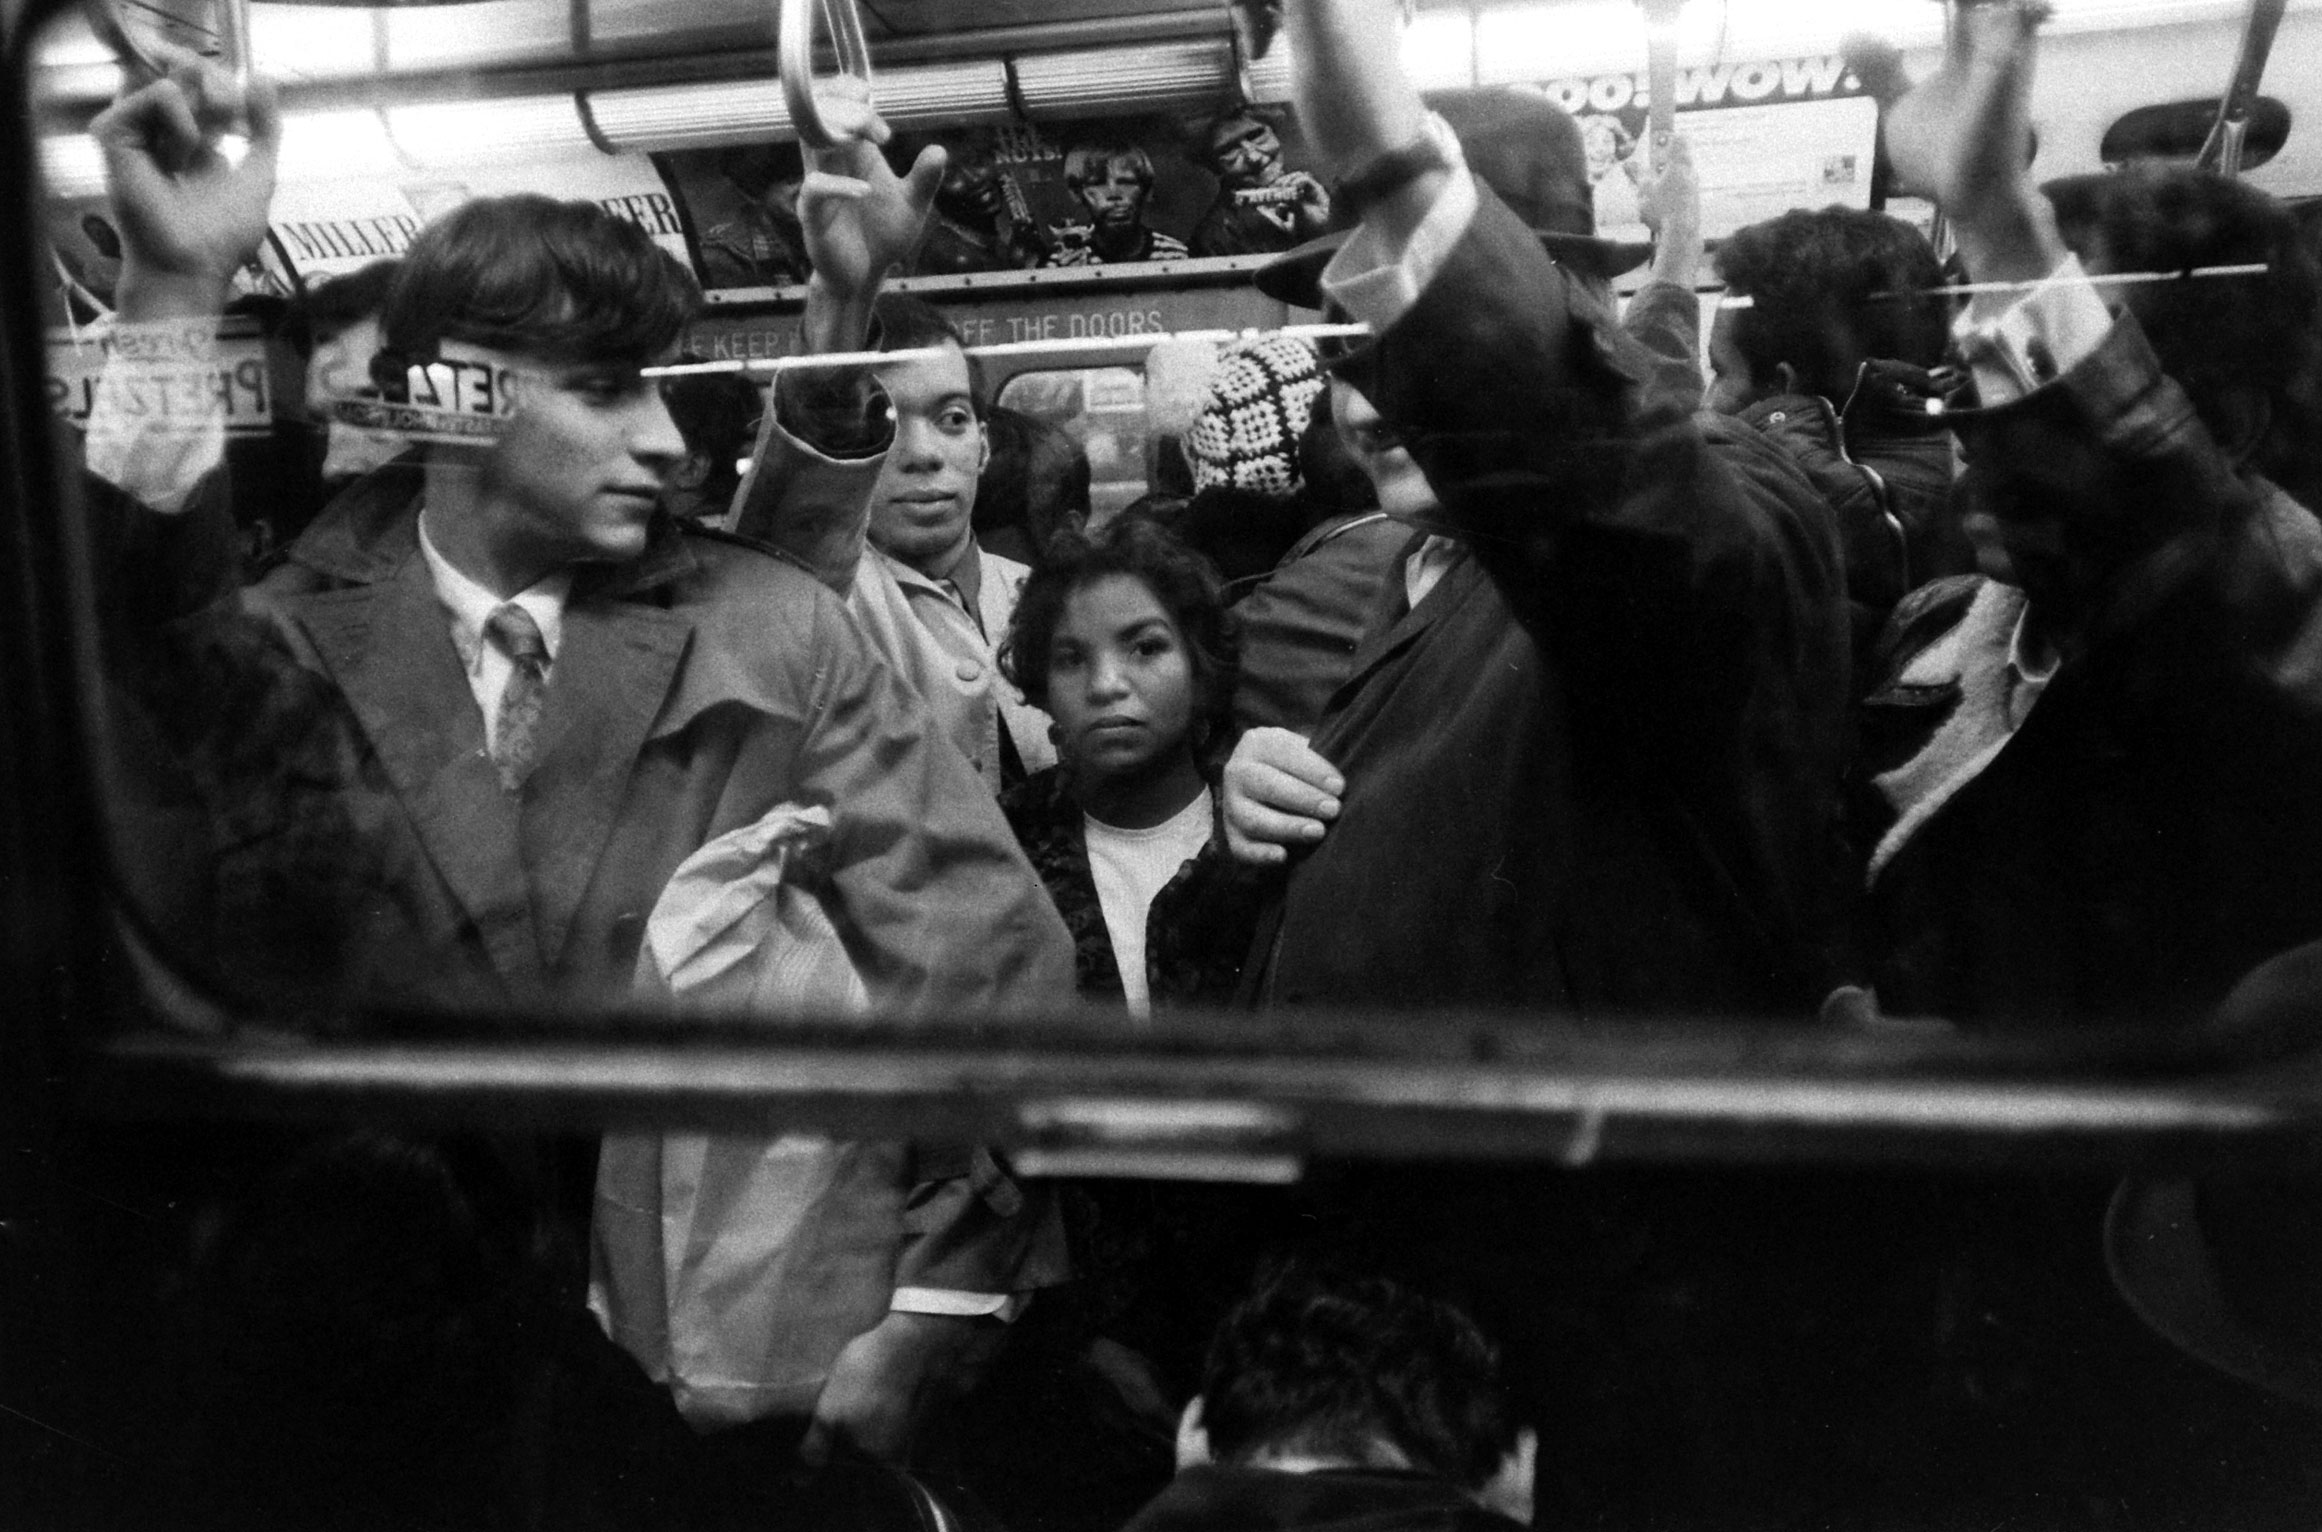 Scene on the New York subway, 1969.